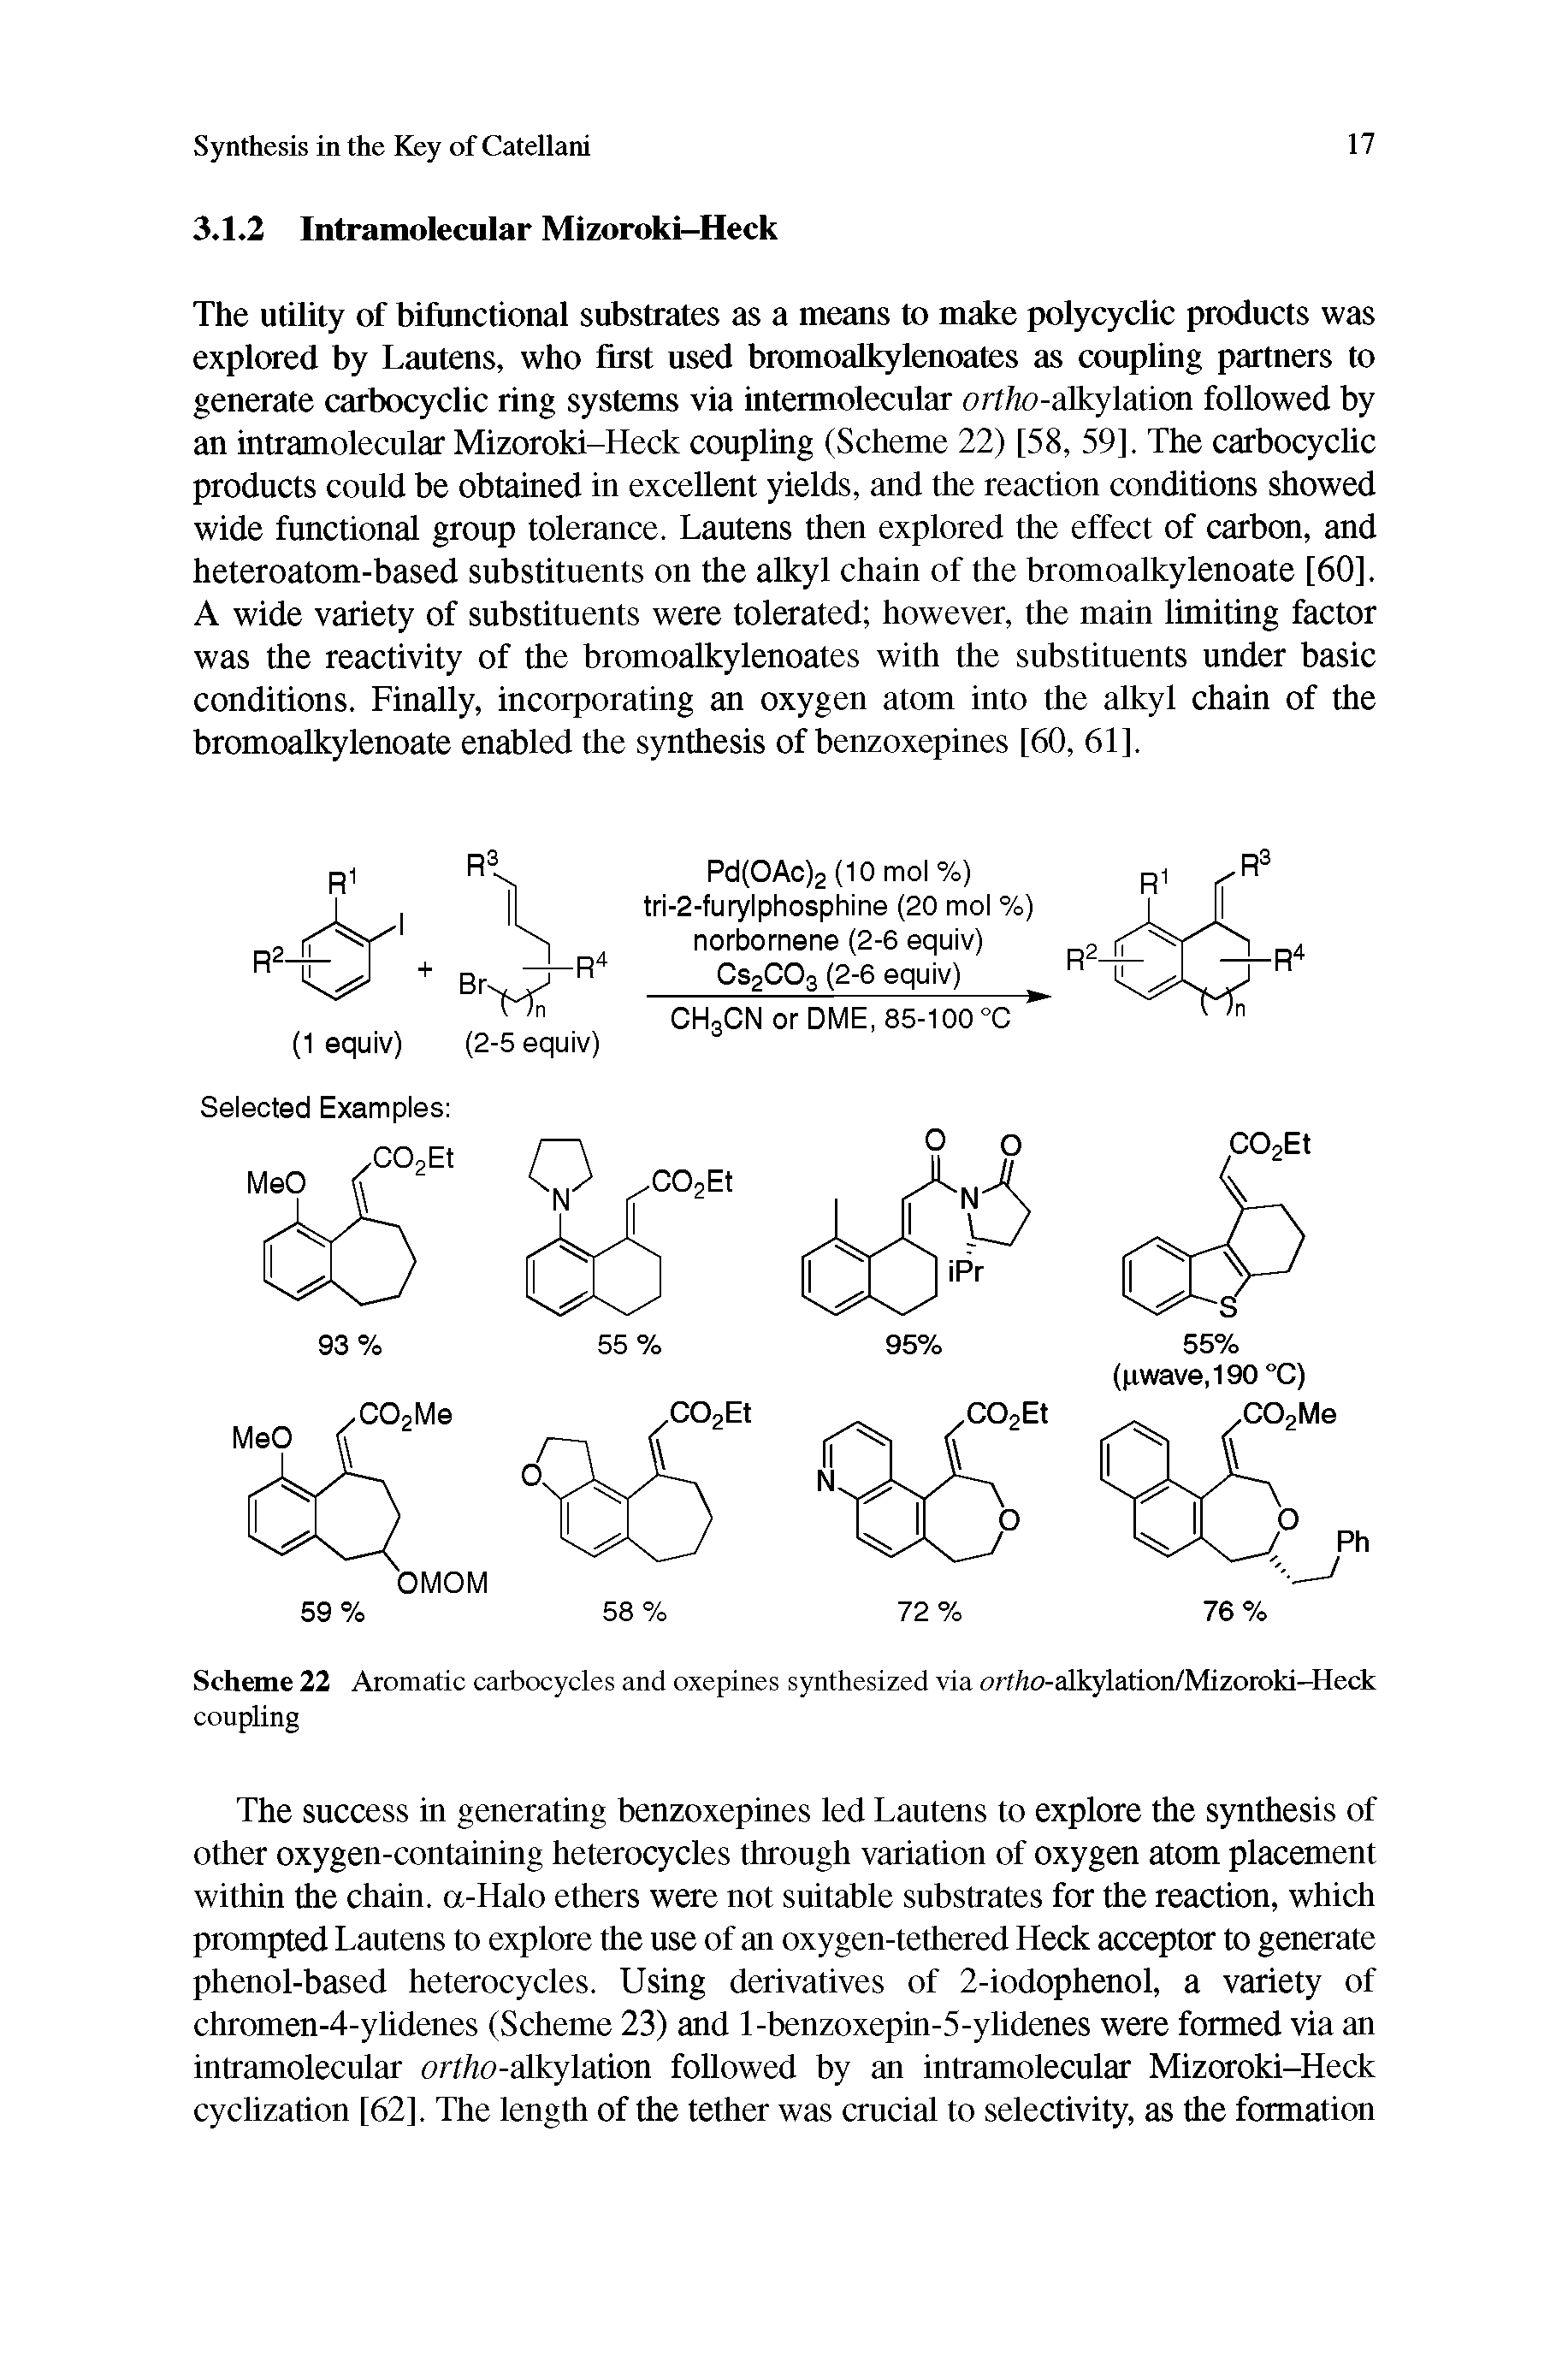 Scheme 22 Aromatic carbocycles and oxepines synthesized via ortho-alkylation/Mizoroki-Heck coupling...